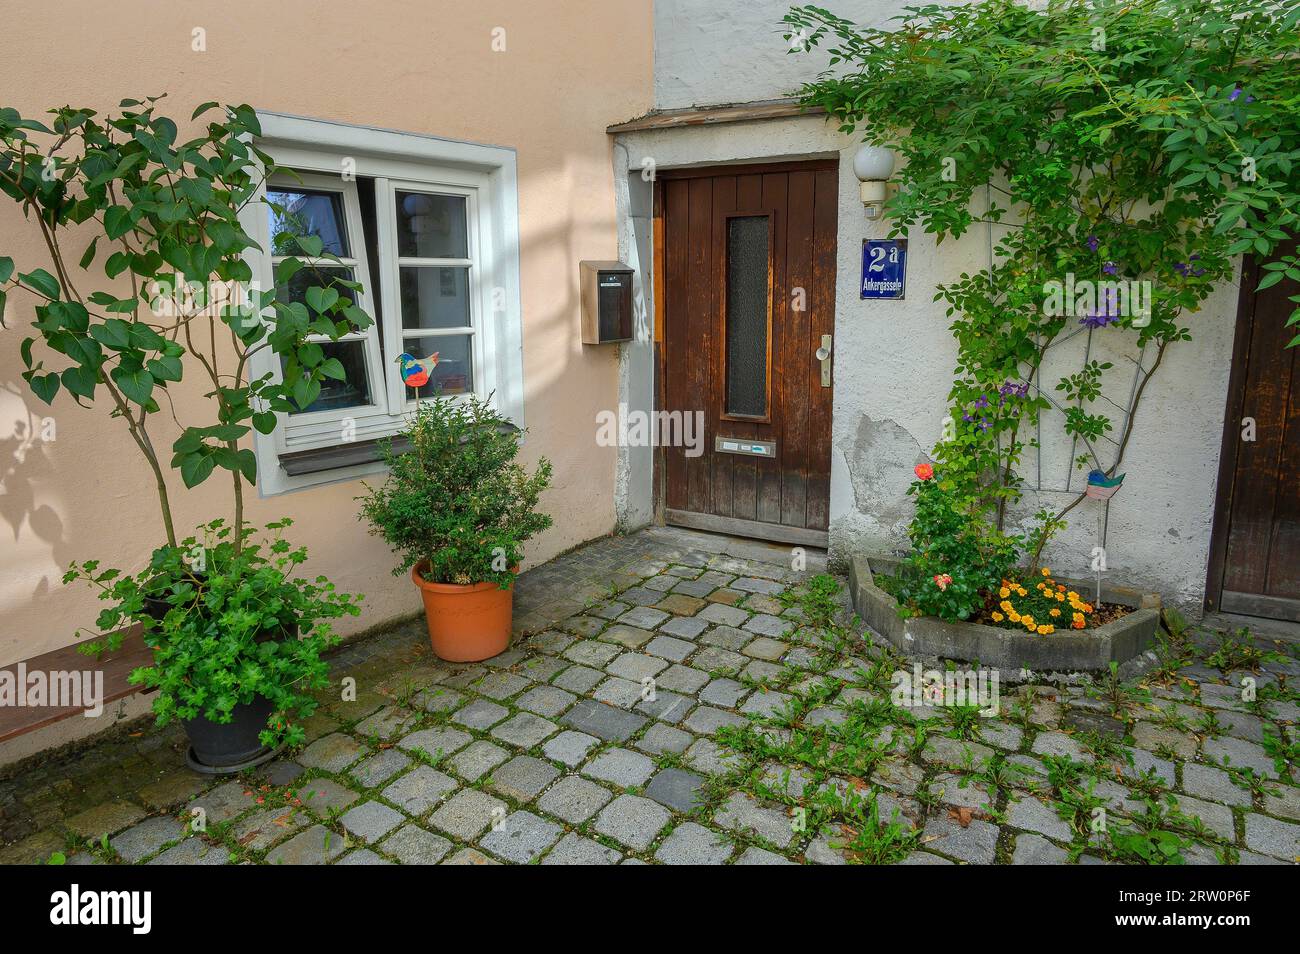 Greened romantic backyard with paving stones, old town, Kempten, Allgaeu, Bavaria, Germany Stock Photo